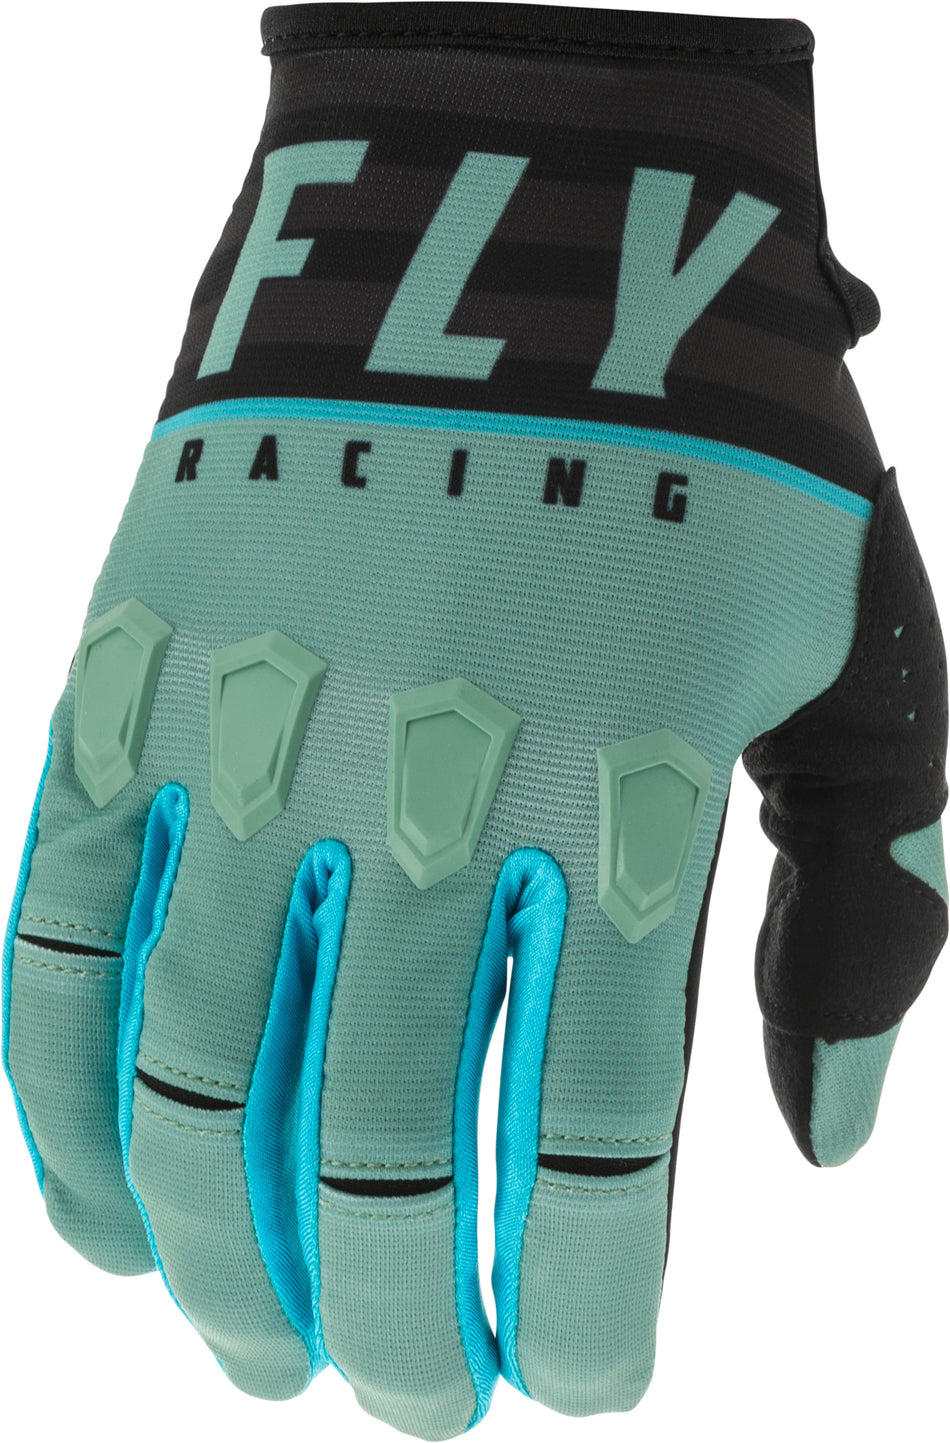 FLY RACING Kinetic K120 Gloves Sage Green/Black Sz 04 373-41604